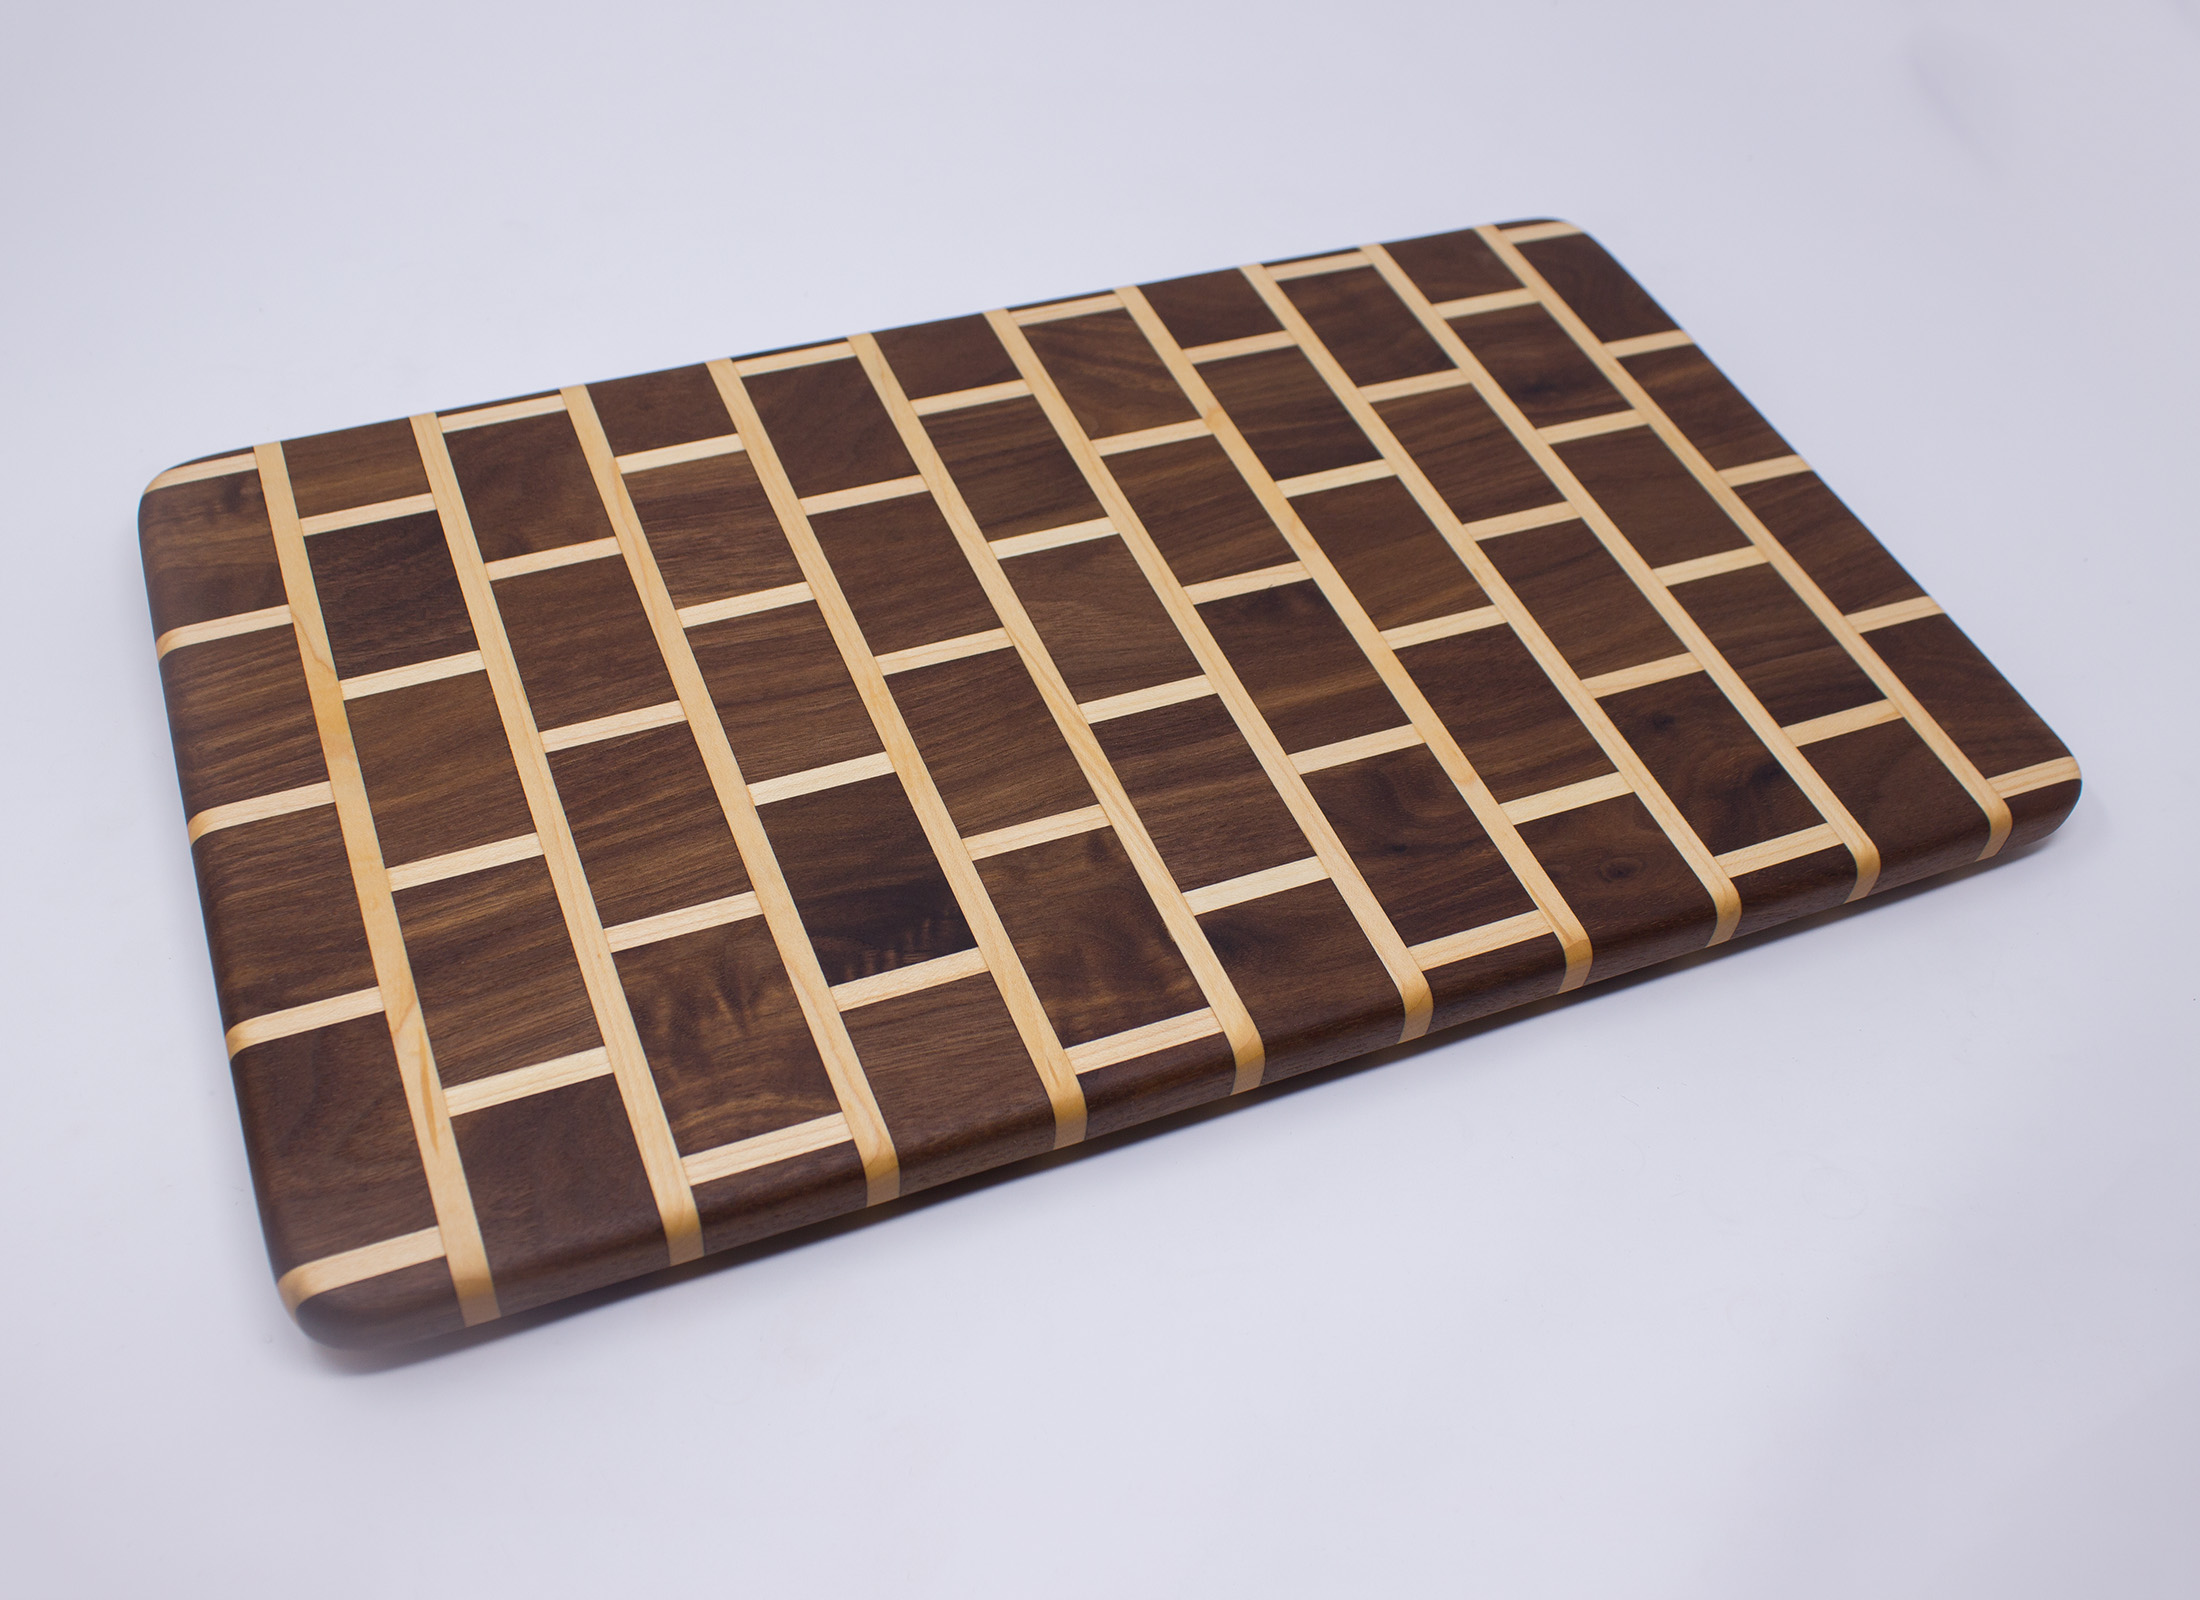 https://www.rockfordwoodcrafts.com/wp-content/uploads/Walnut-and-Maple-Brick-Pattern-Cutting-Board-Top-Angled.jpg